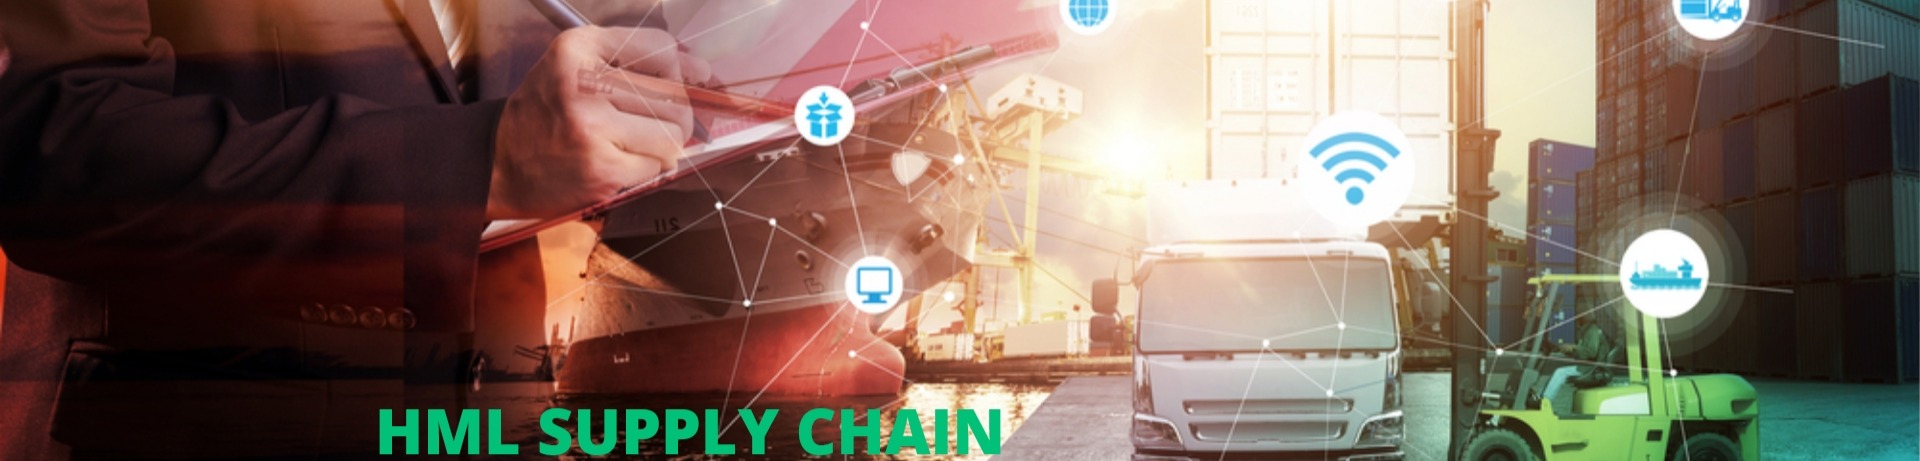 Hml supply chain jsc